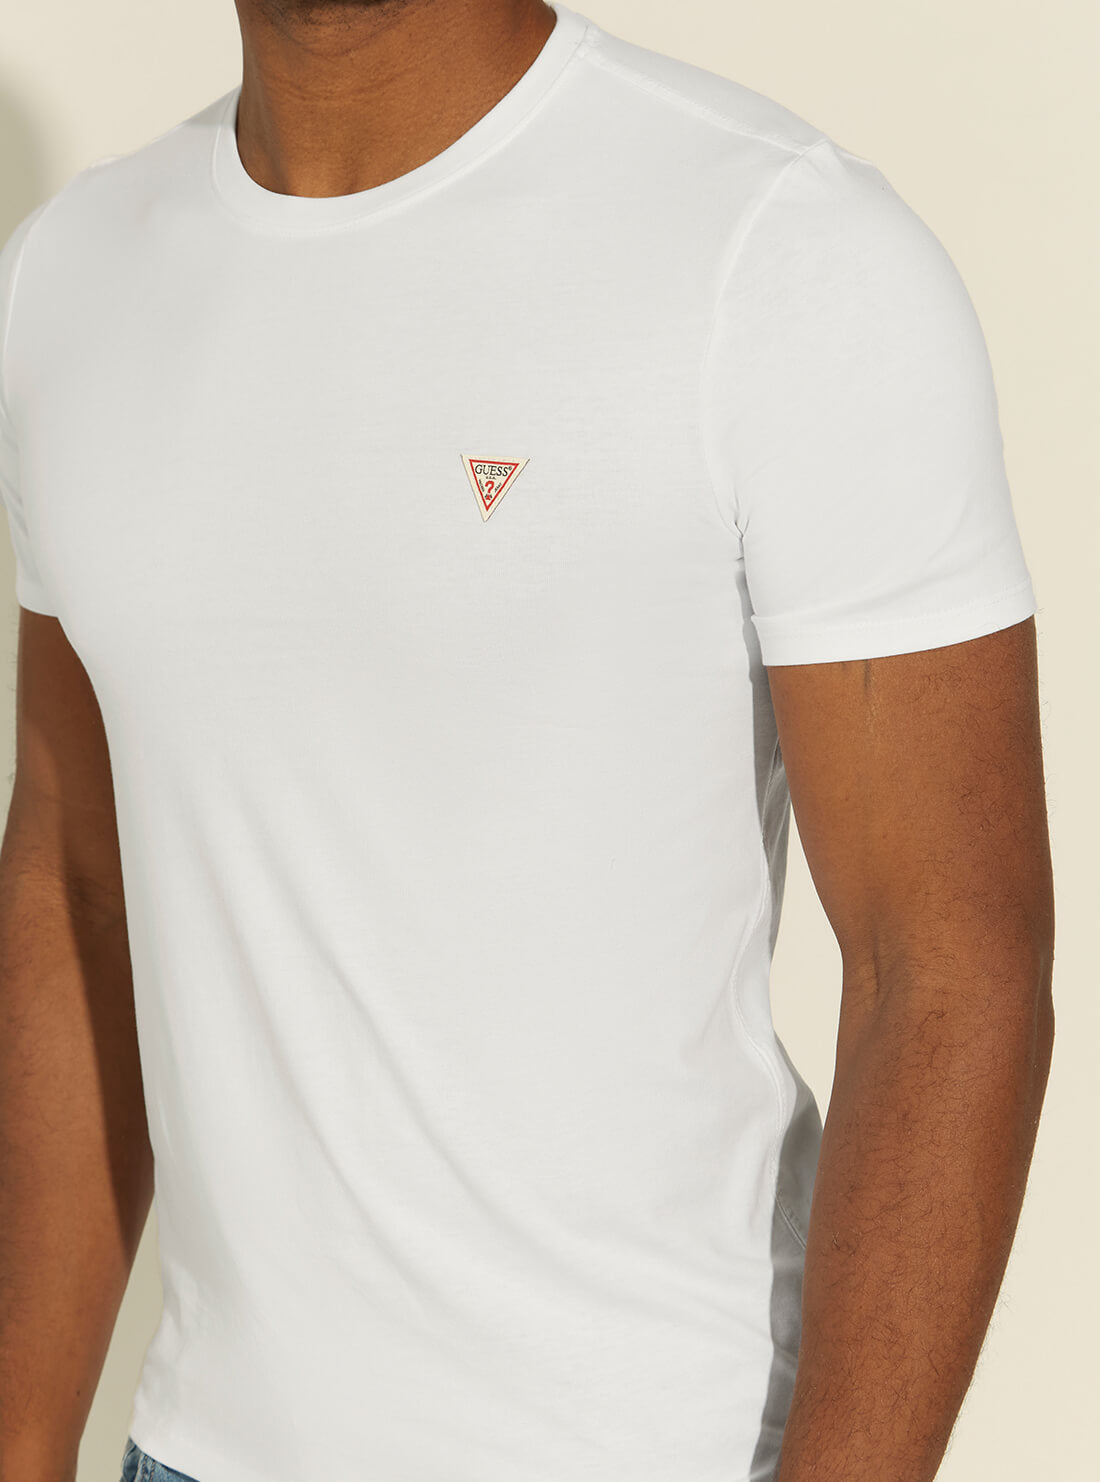 GUESS Mens White Slim Fit Logo T-Shirt M1RI36I3Z11 Detail View